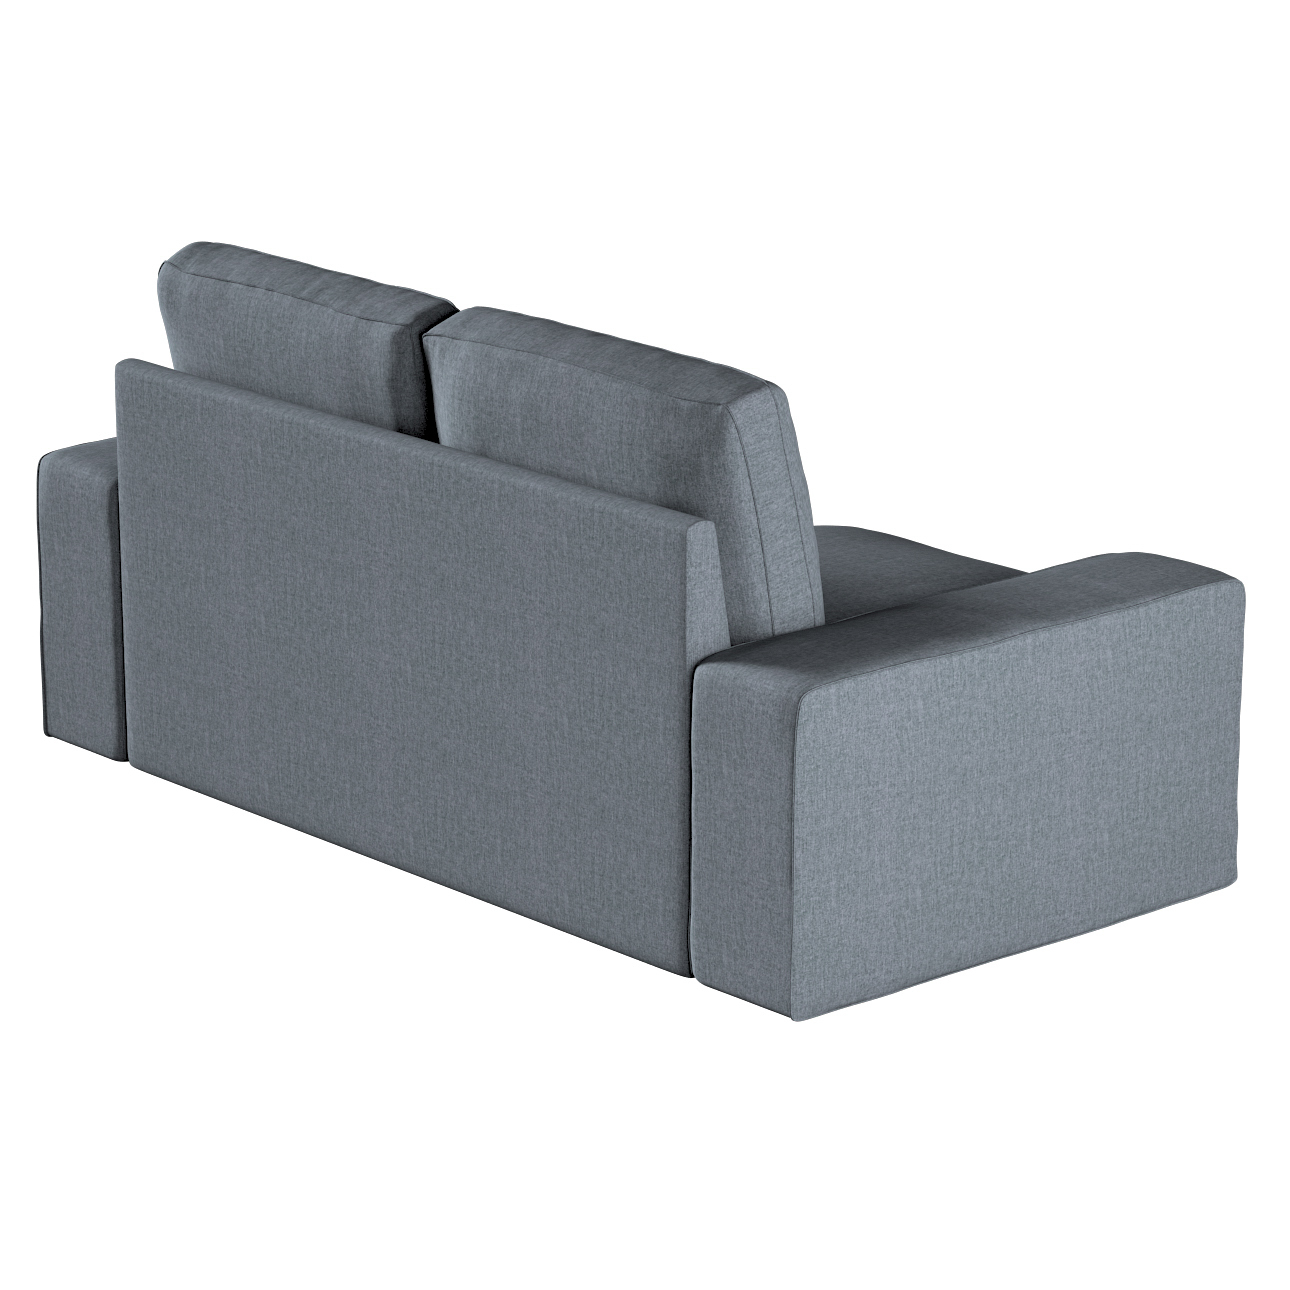 Bezug für Kivik 2-Sitzer Sofa, grau, Bezug für Sofa Kivik 2-Sitzer, City (7 günstig online kaufen